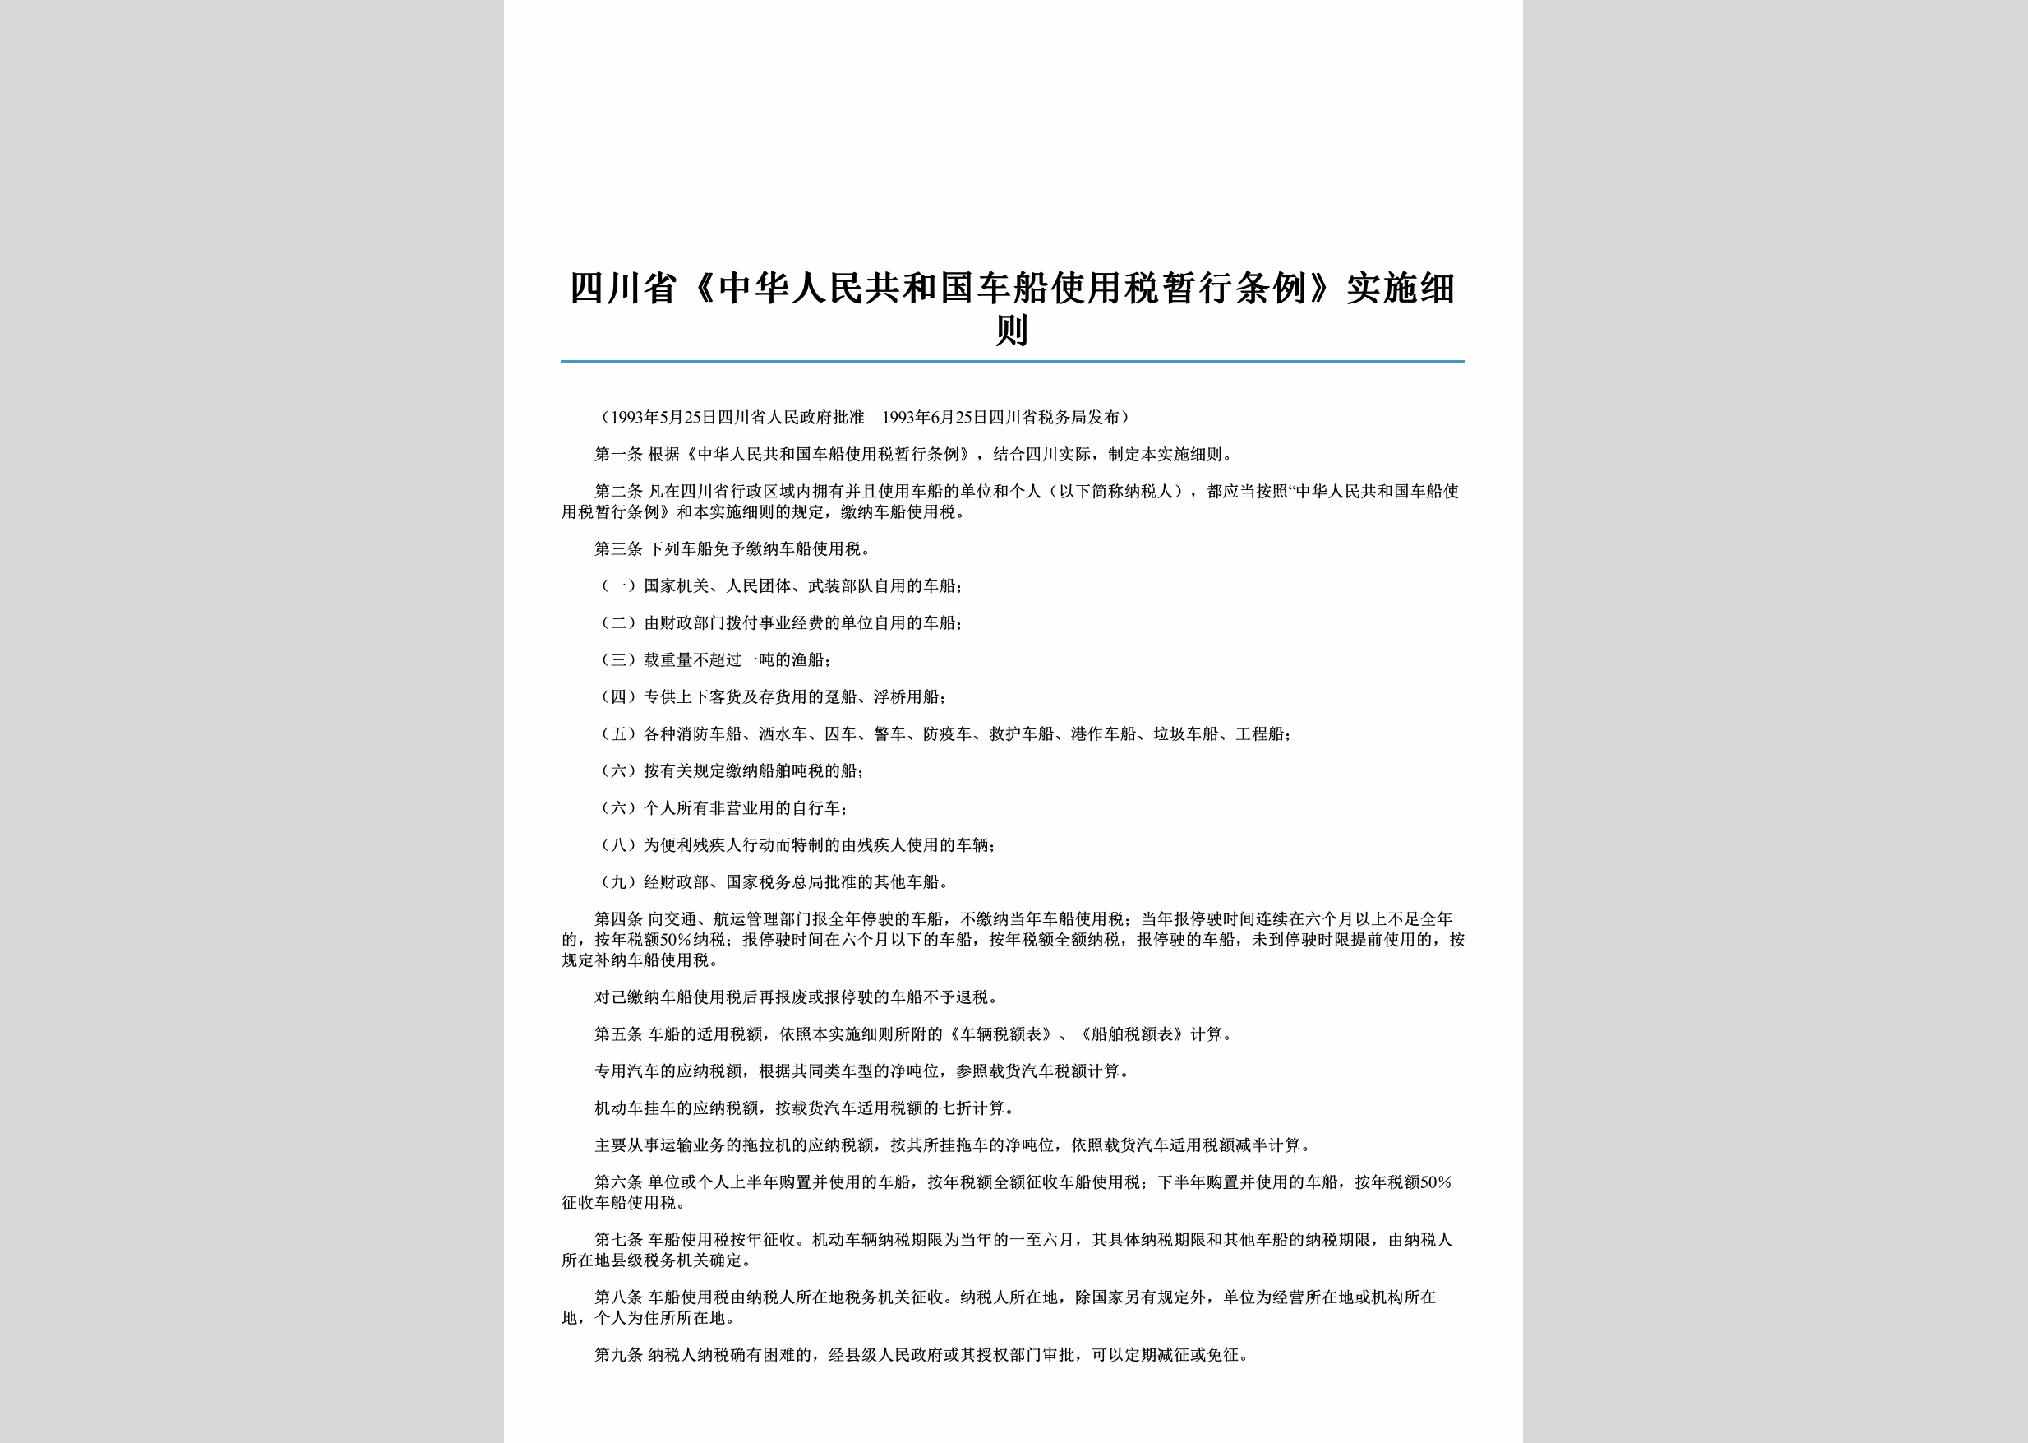 SC-CHSYSSXZ-2006：四川省《中华人民共和国车船使用税暂行条例》实施细则